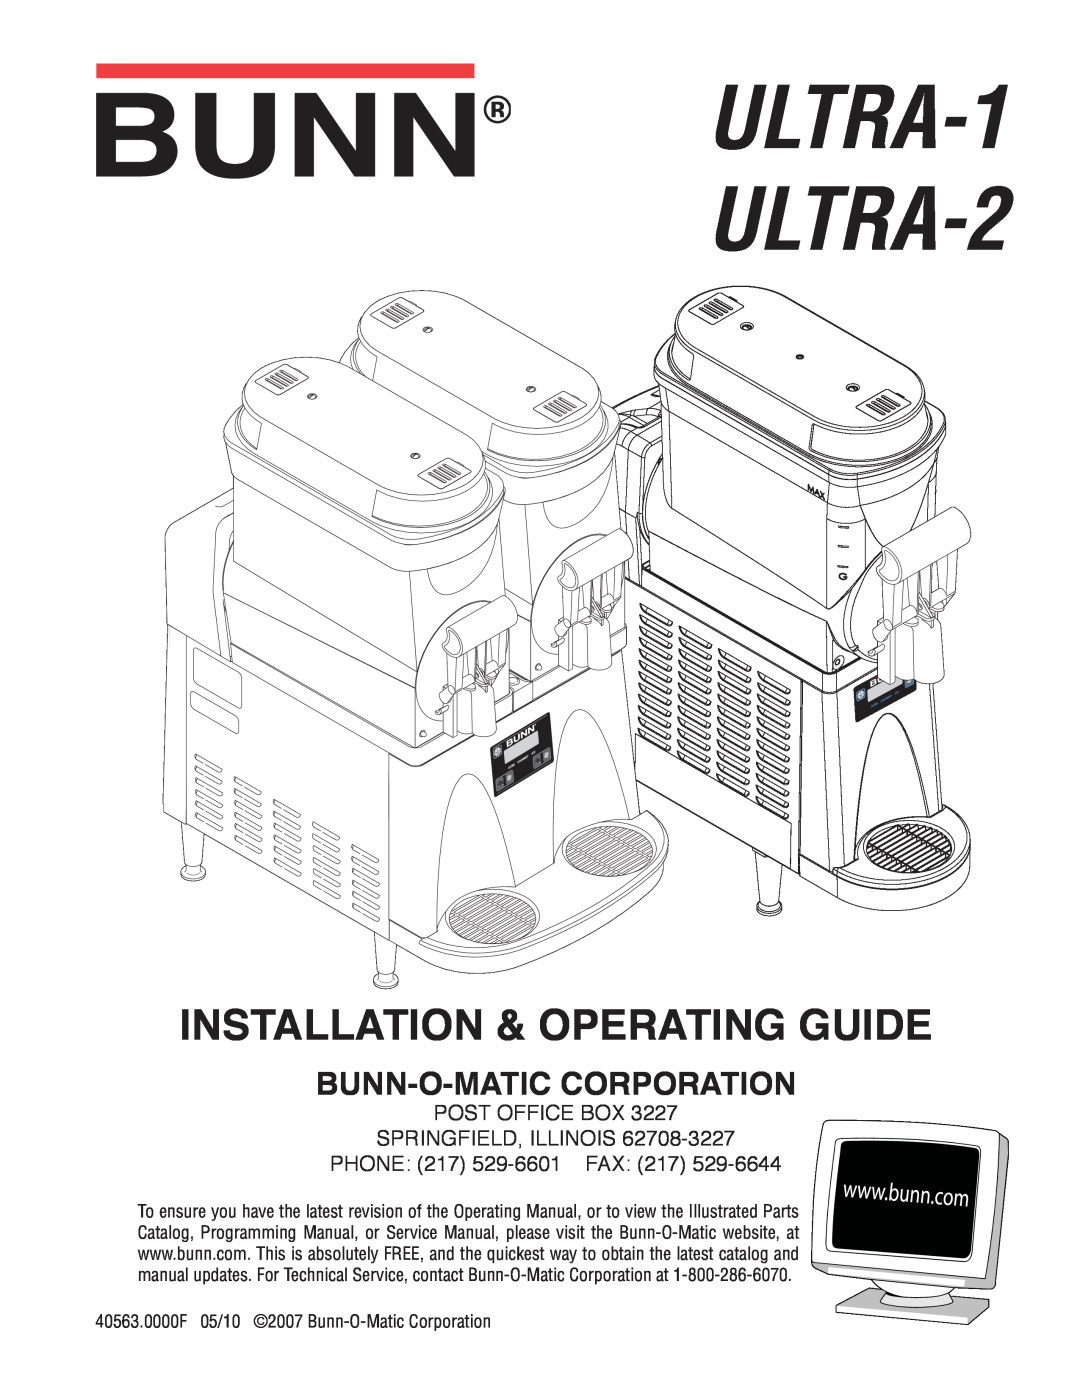 Bunn service manual ULTRA-1 ULTRA-2, Installation & Operating Guide, Bunn-O-Maticcorporation 